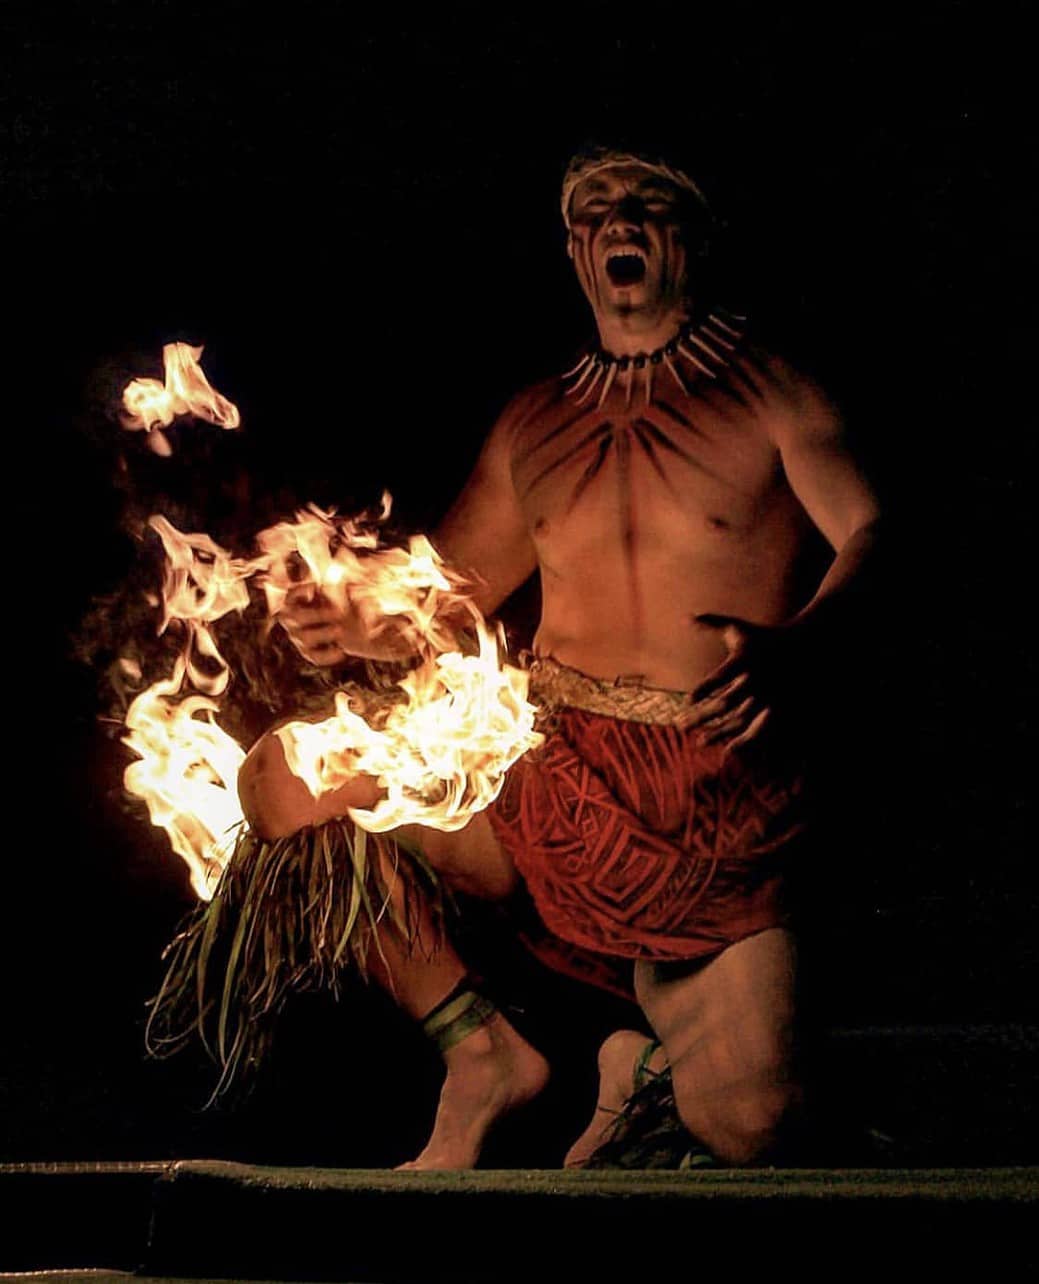 Samoan fire dancer kneeing at Paradise Cove Luau in O'ahu, Hawaii